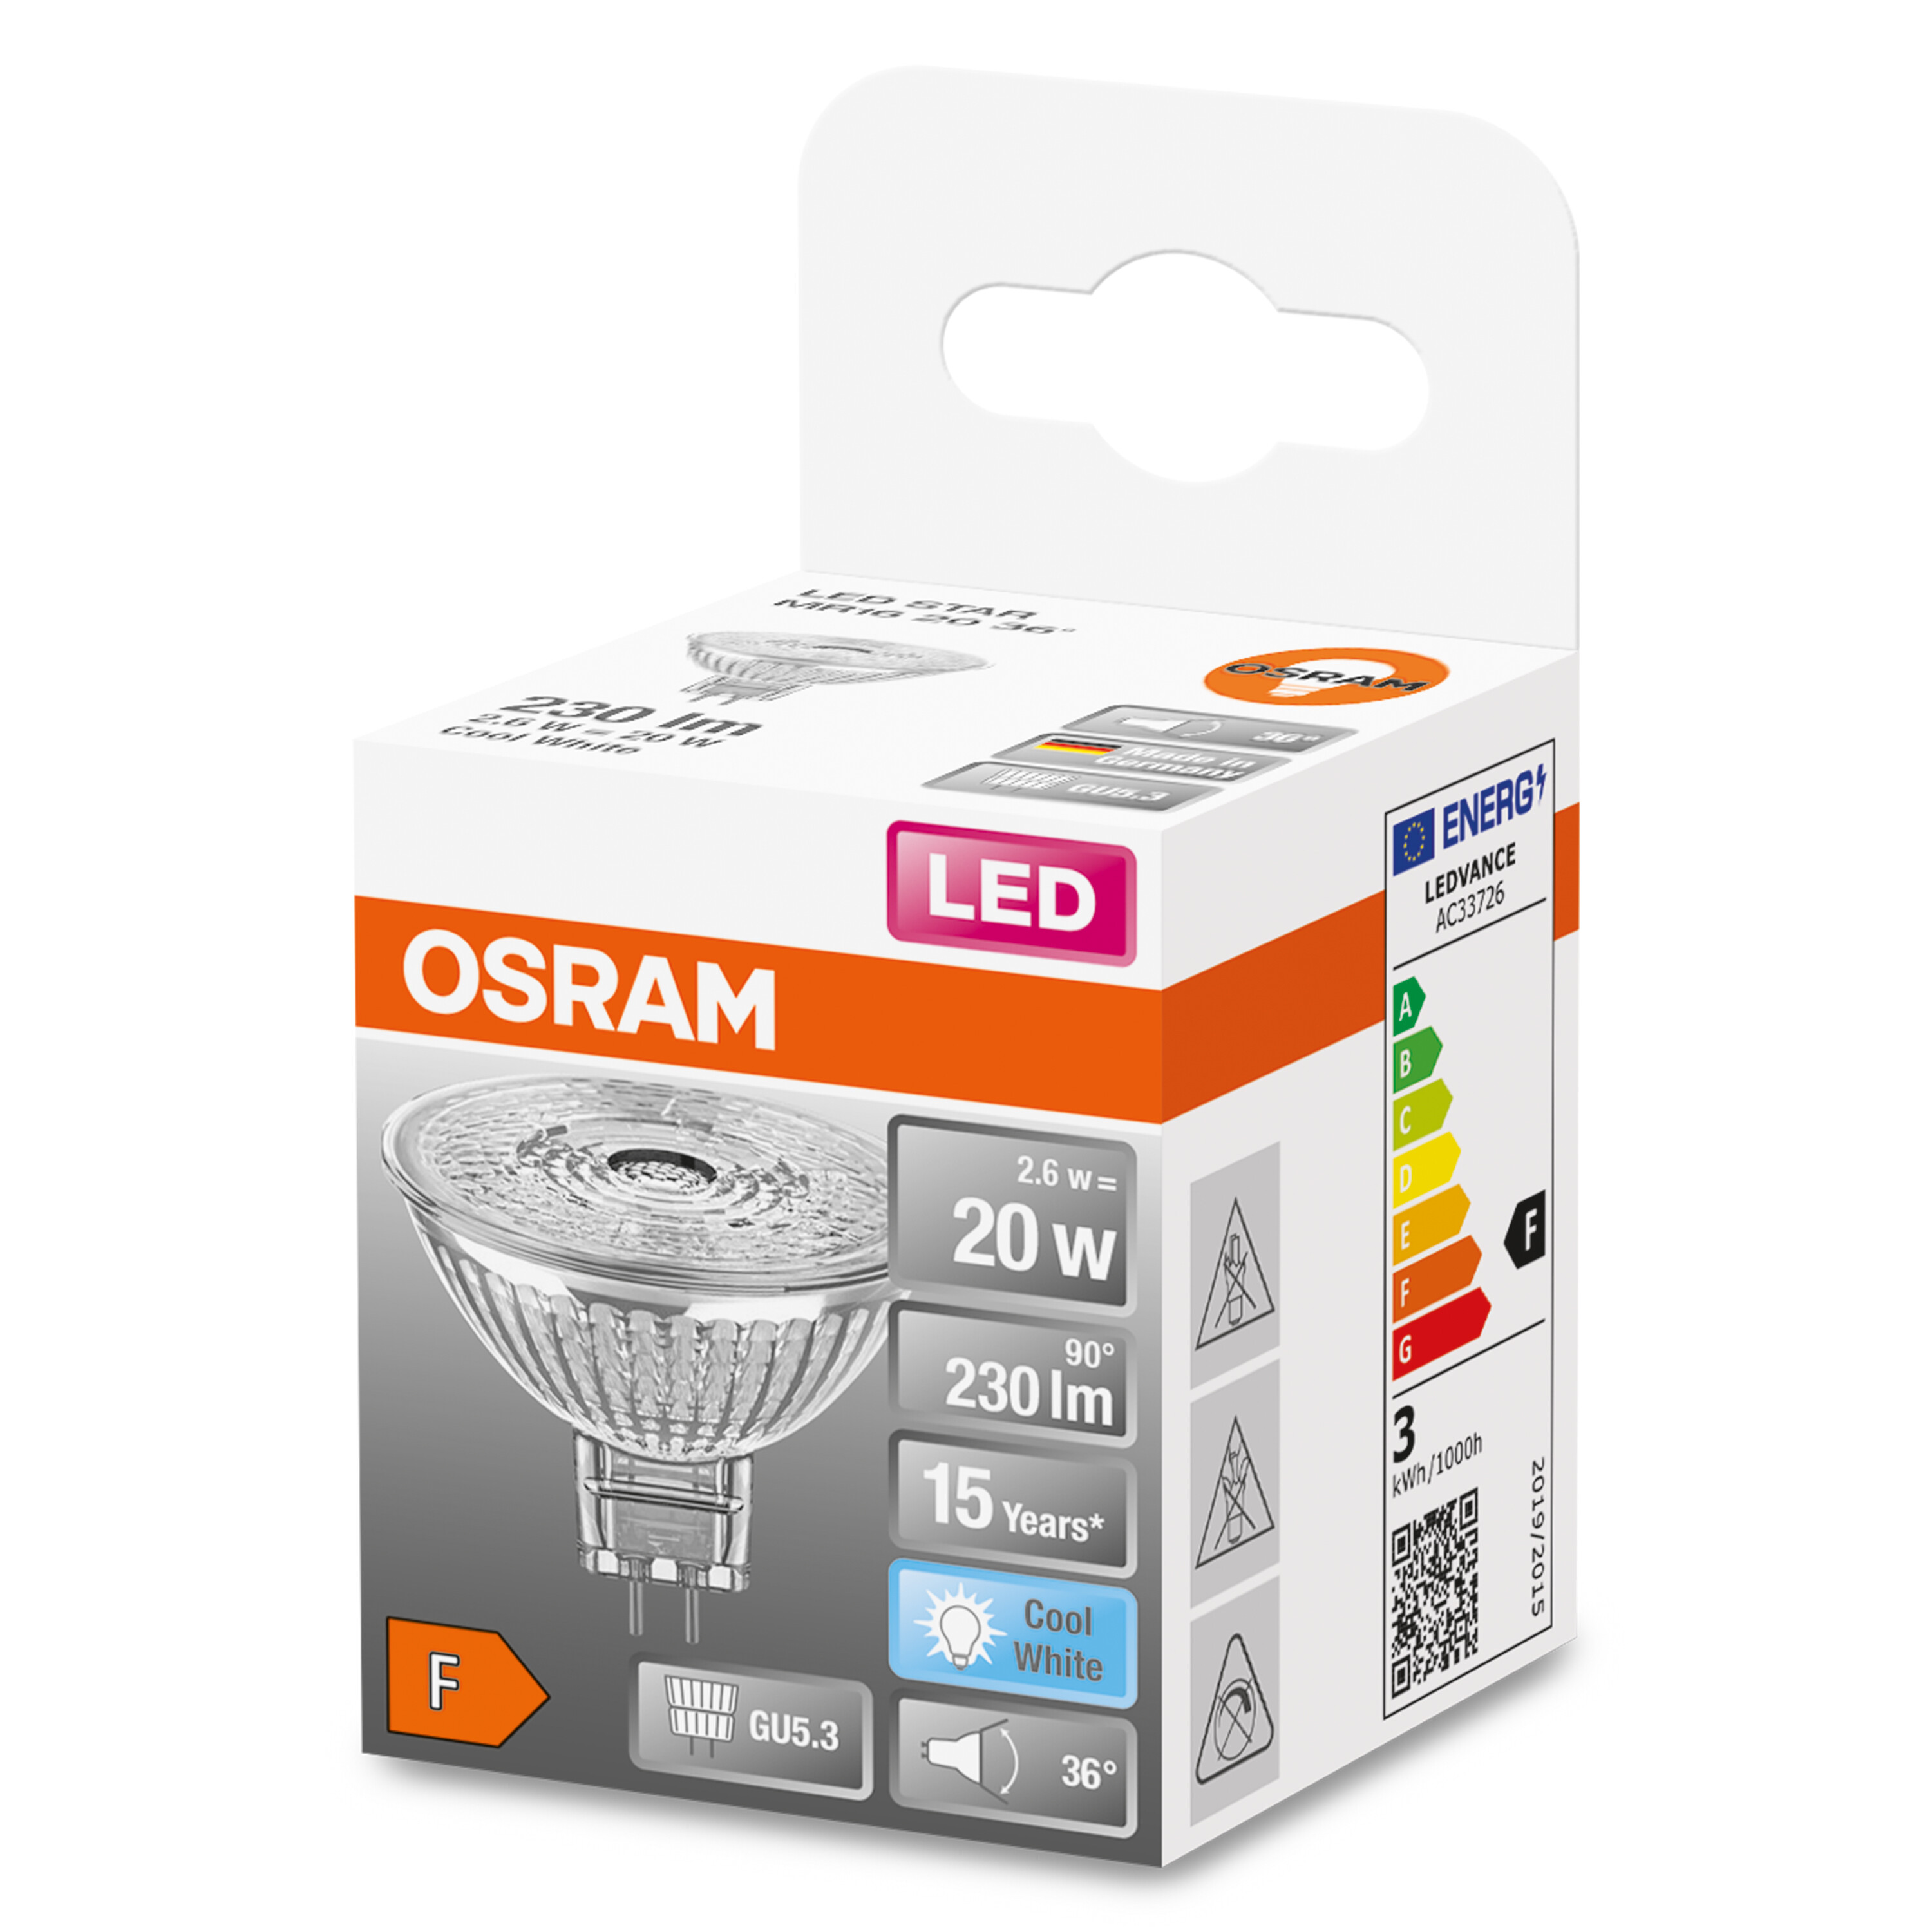 LED-Refektorlampe STAR OSRAM  Kaltweiß MR16 LED